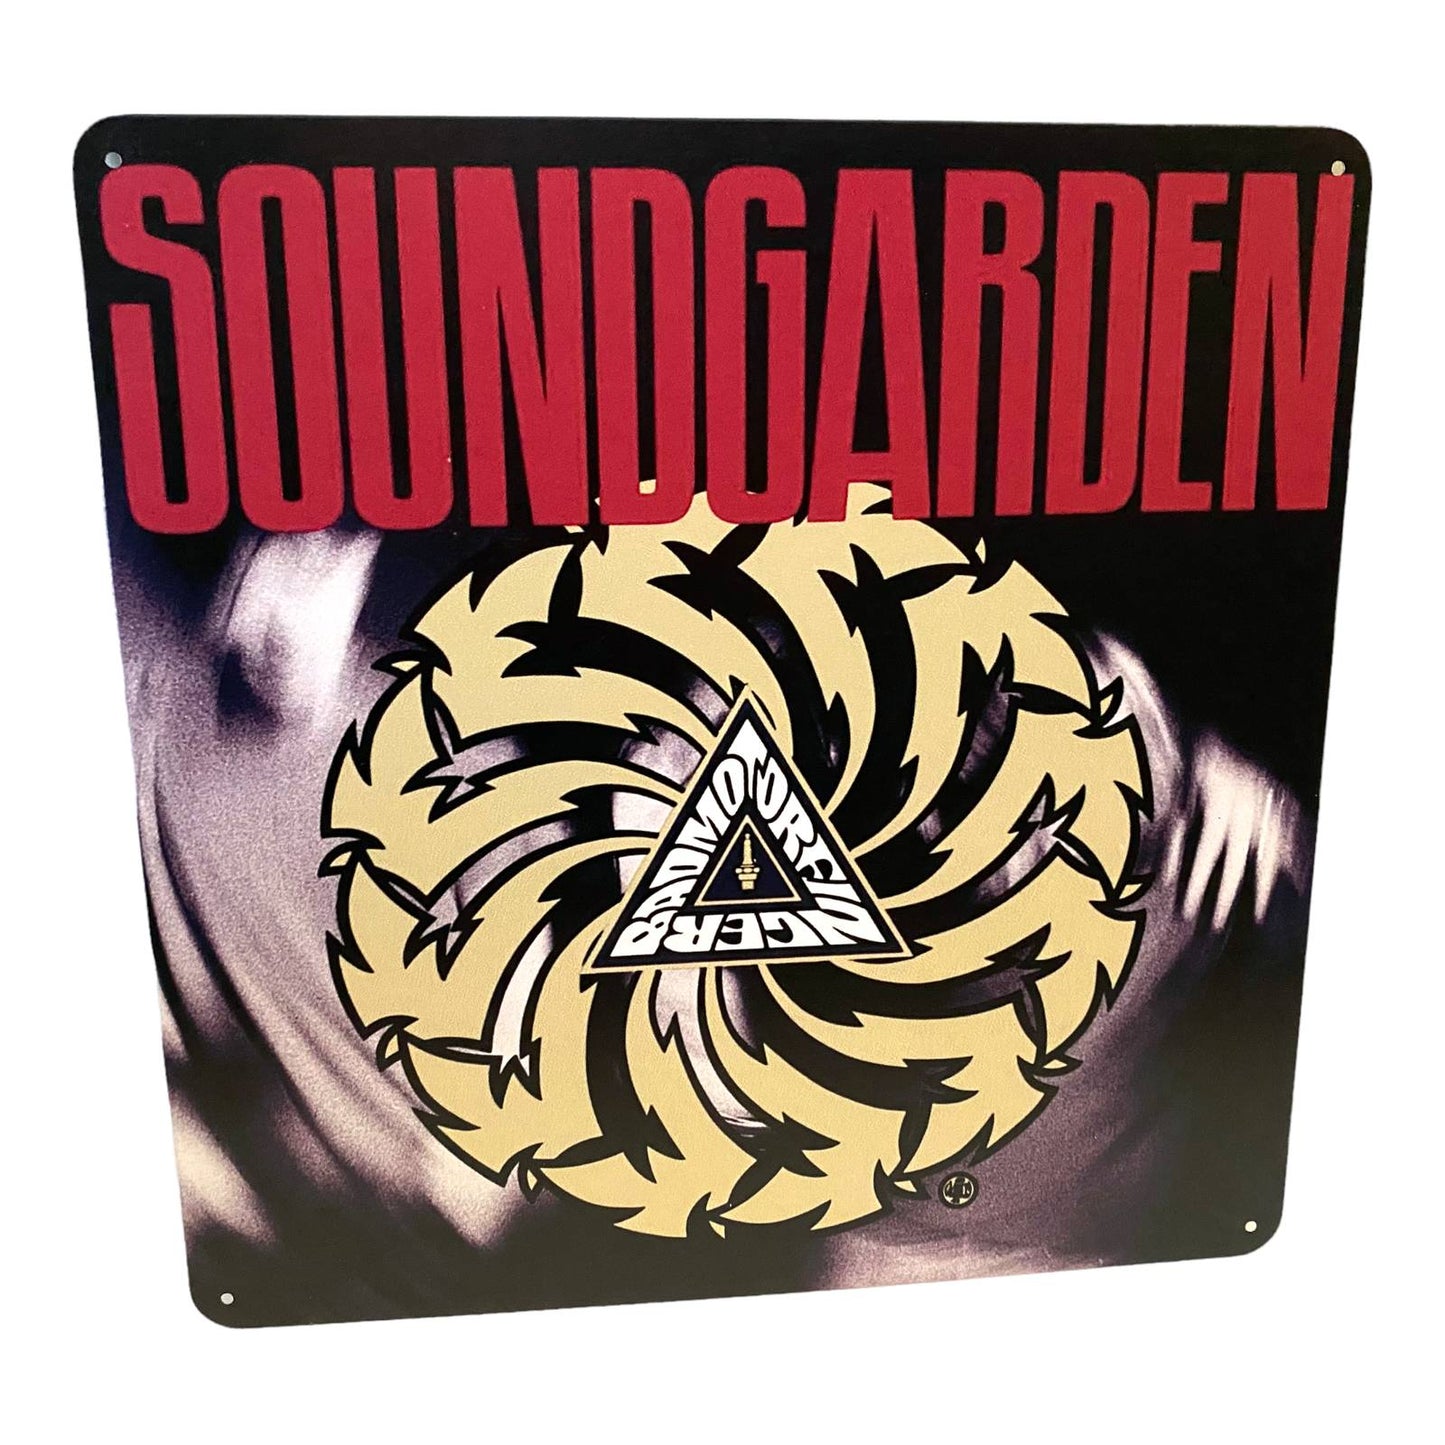 Soundgarden - Badmotorfinger Album Cover Metal Print Tin Sign 12"x 12"